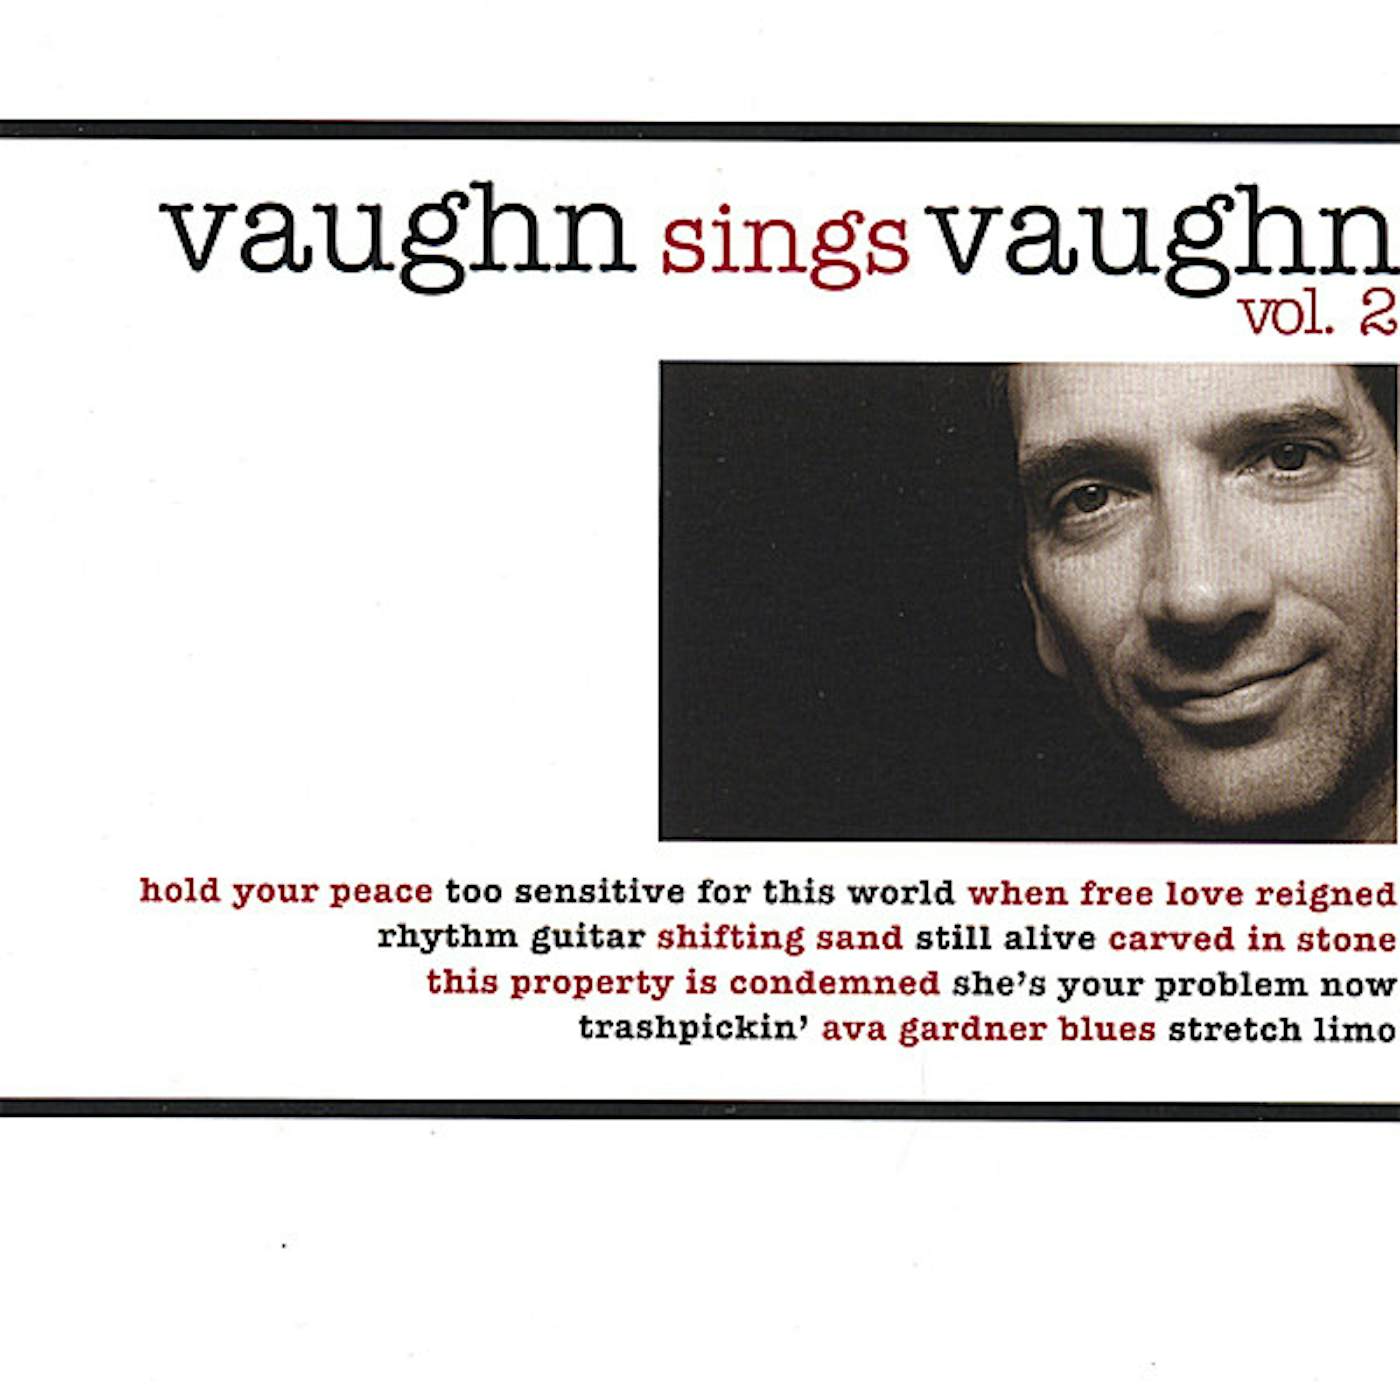 Ben Vaughn VAUGHN SINGS VAUGHN 2 CD